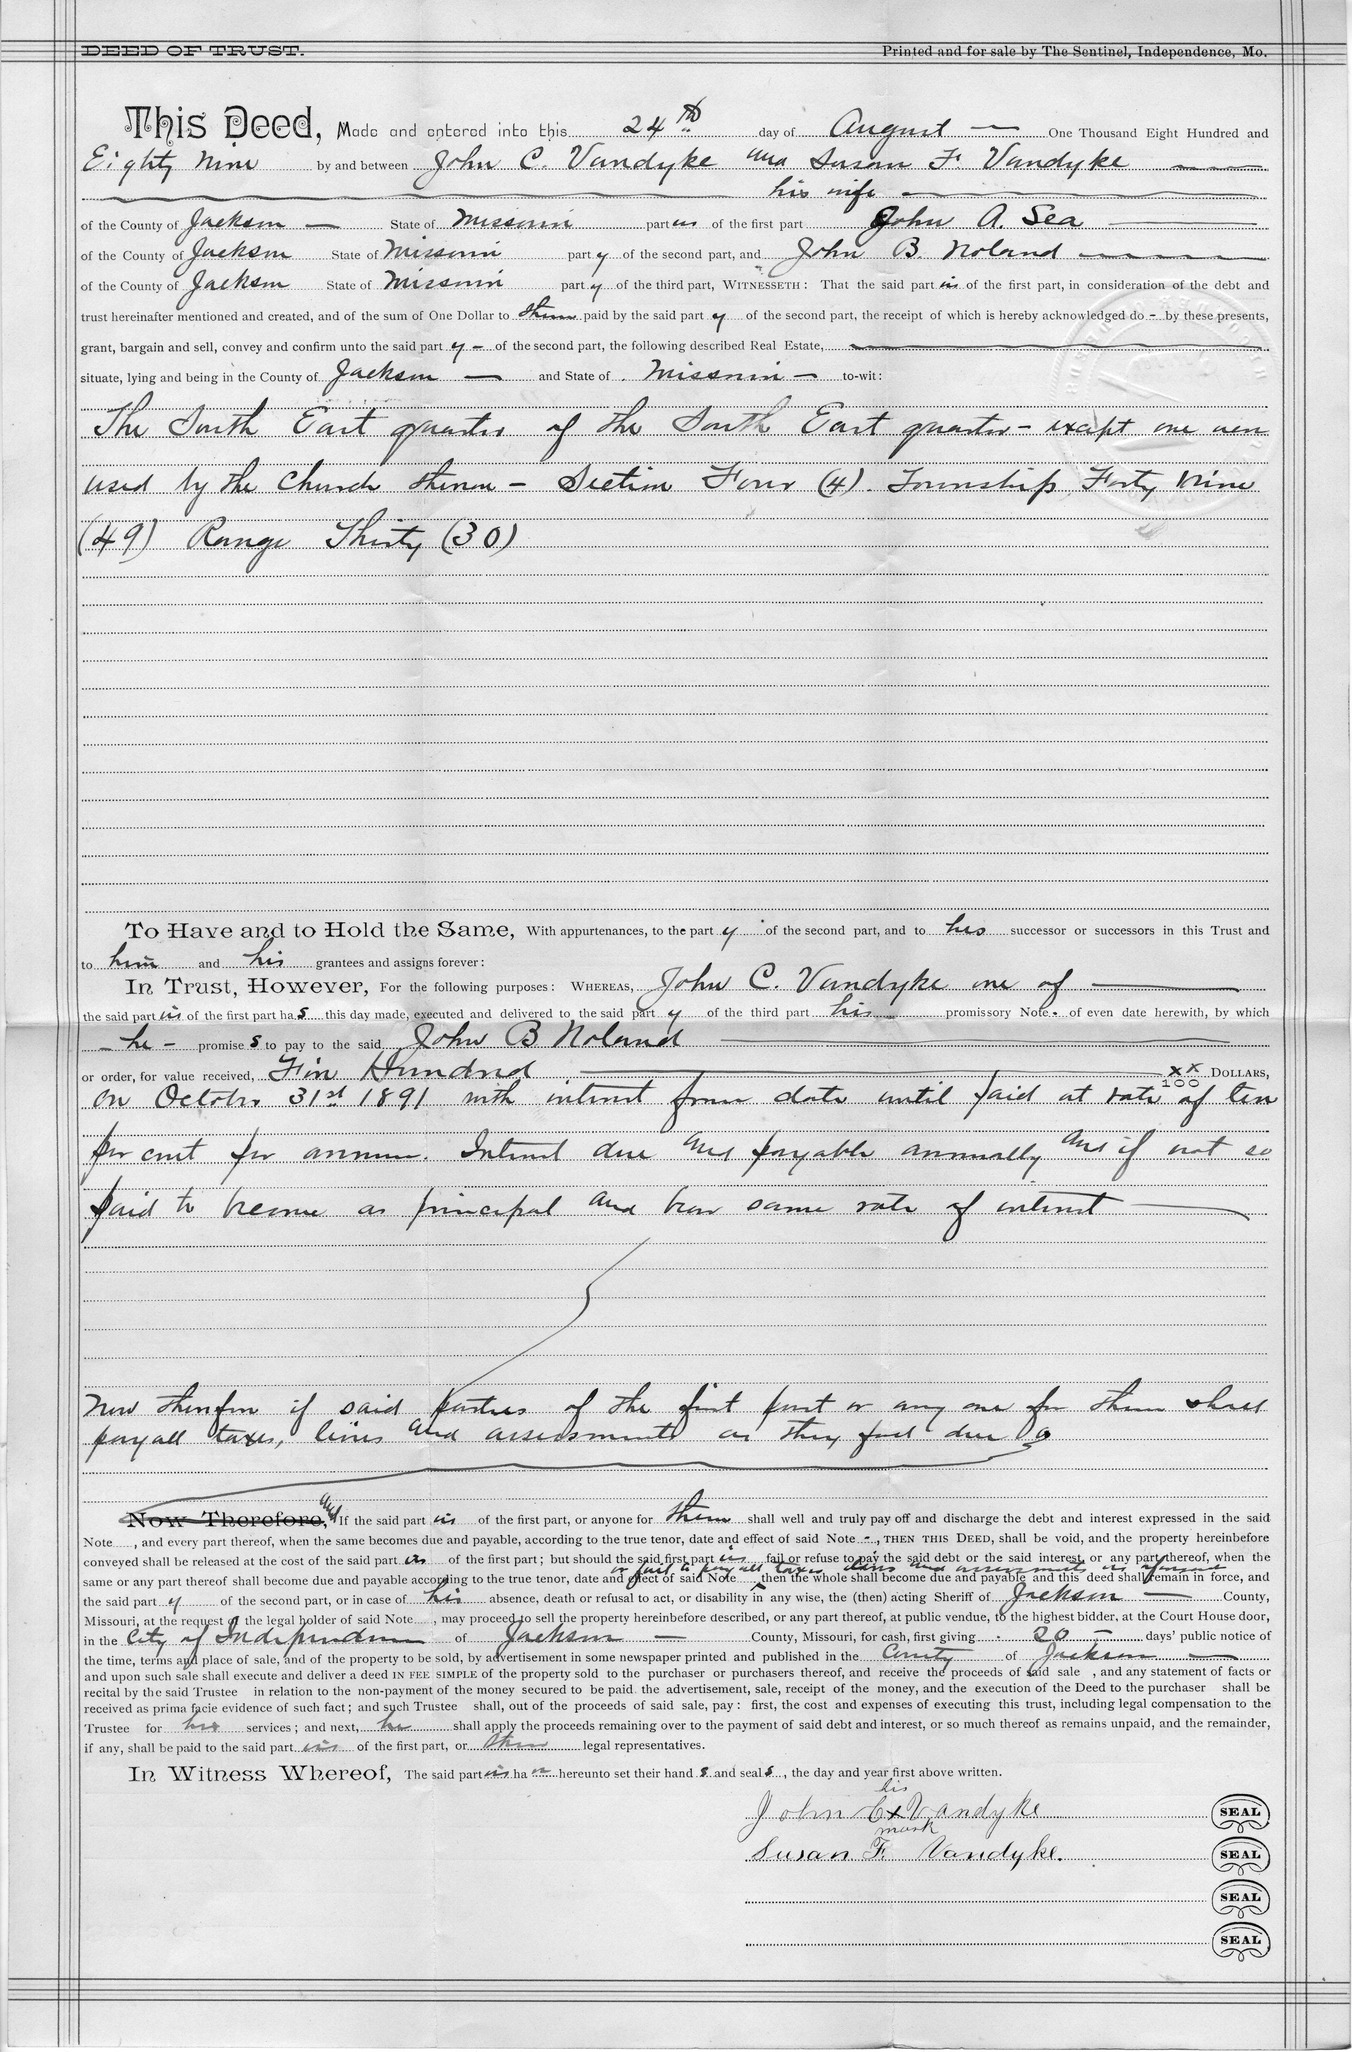 Deed of Trust from John C. Vandyke and Susan F. Vandyke to John A. Sea for John B. Noland